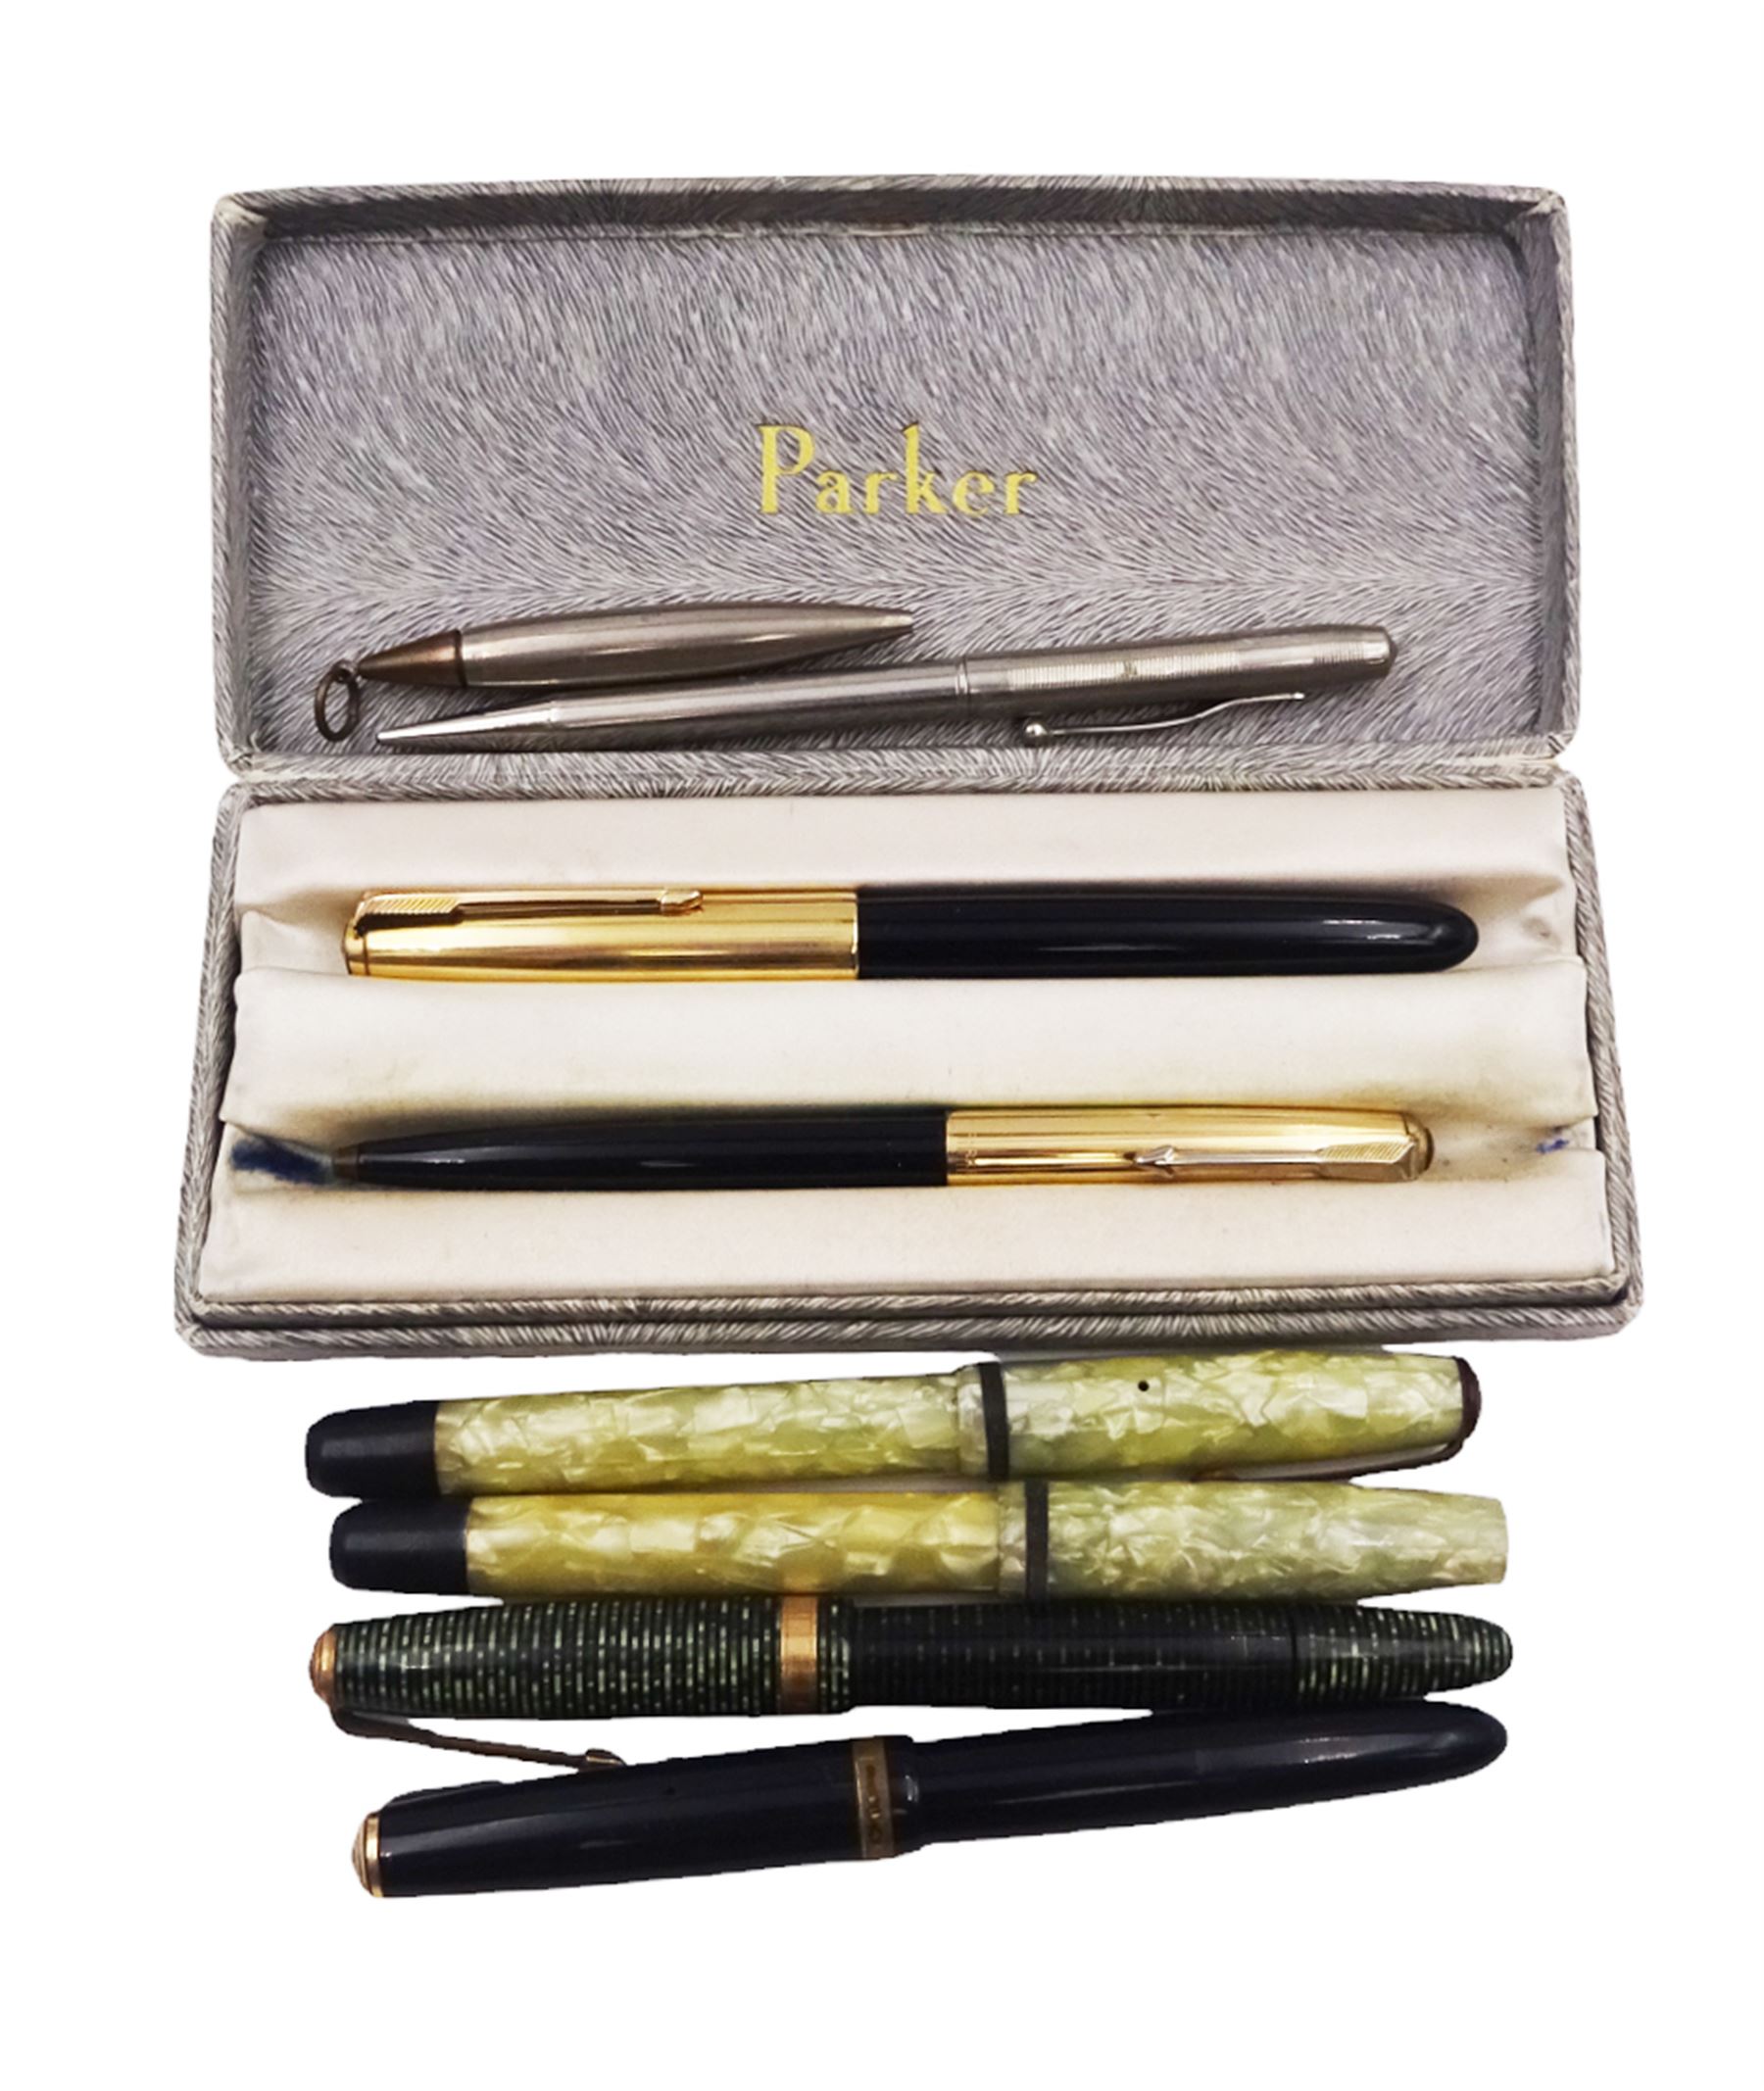 Parker Duofold fountain pen